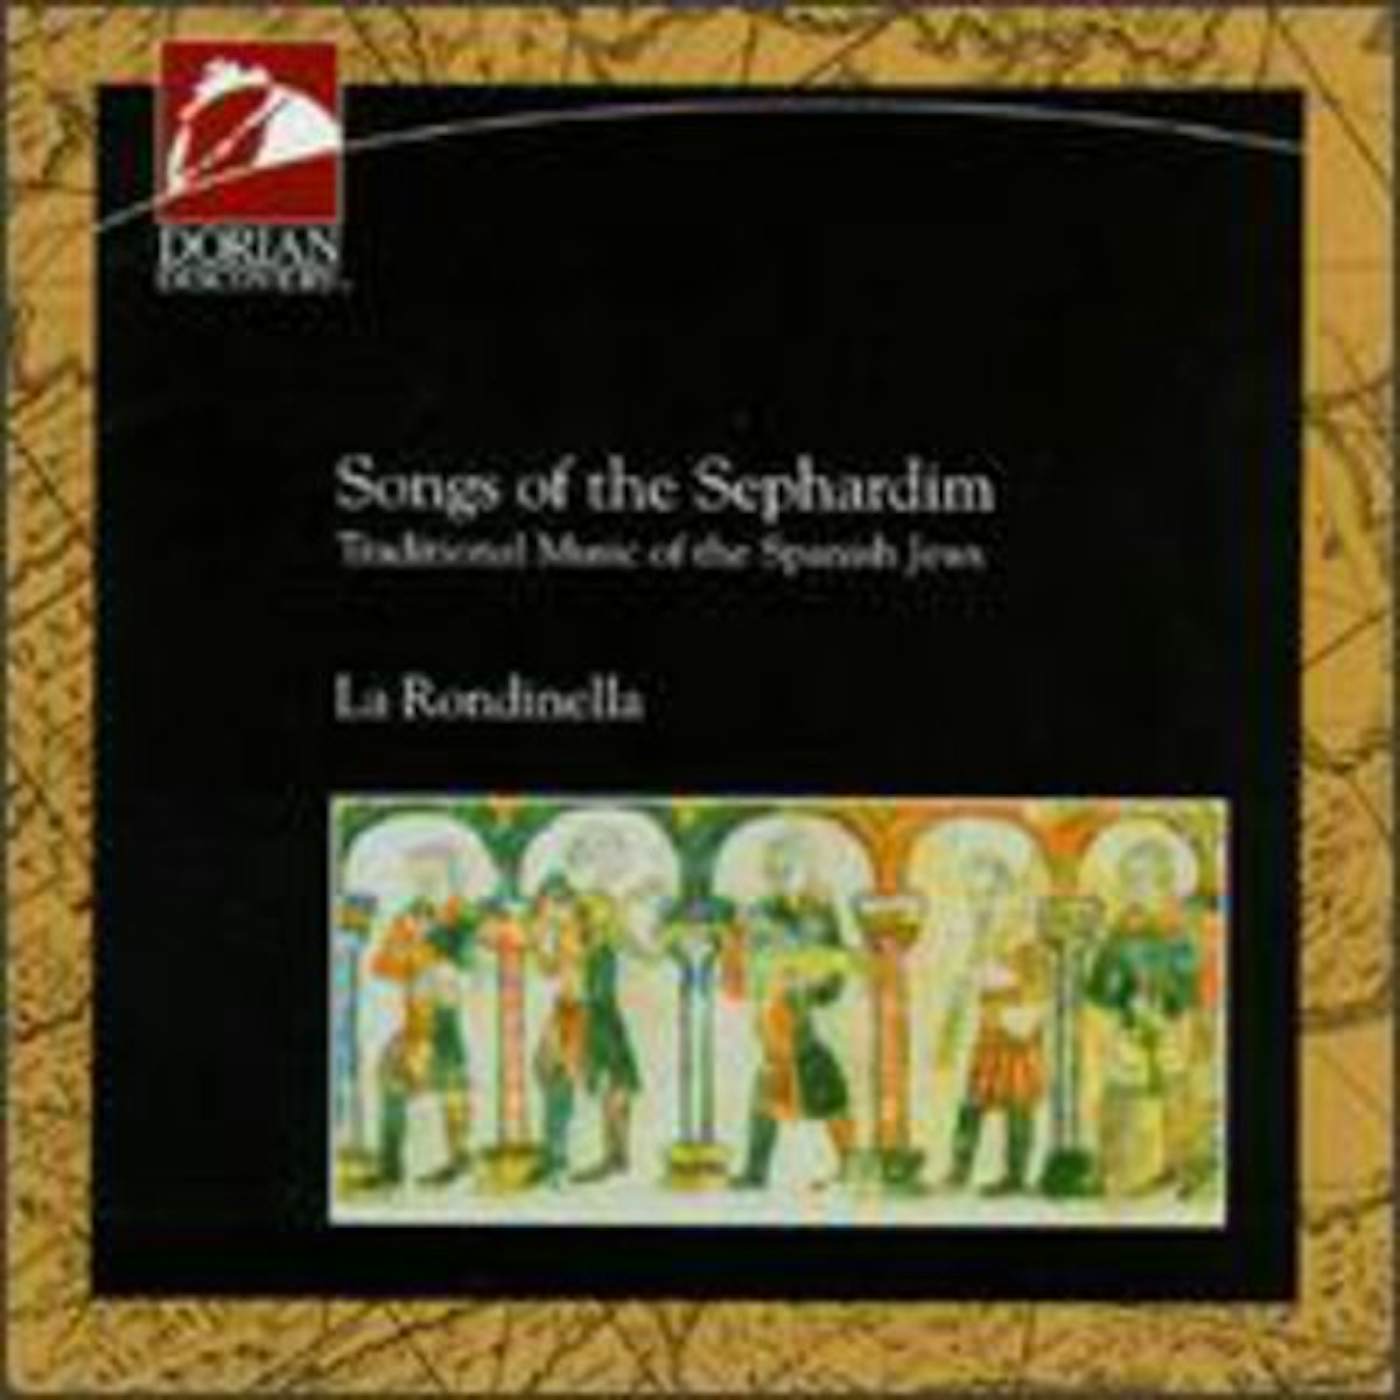 La Rondinella SONGS OF THE SEPHARDIM CD